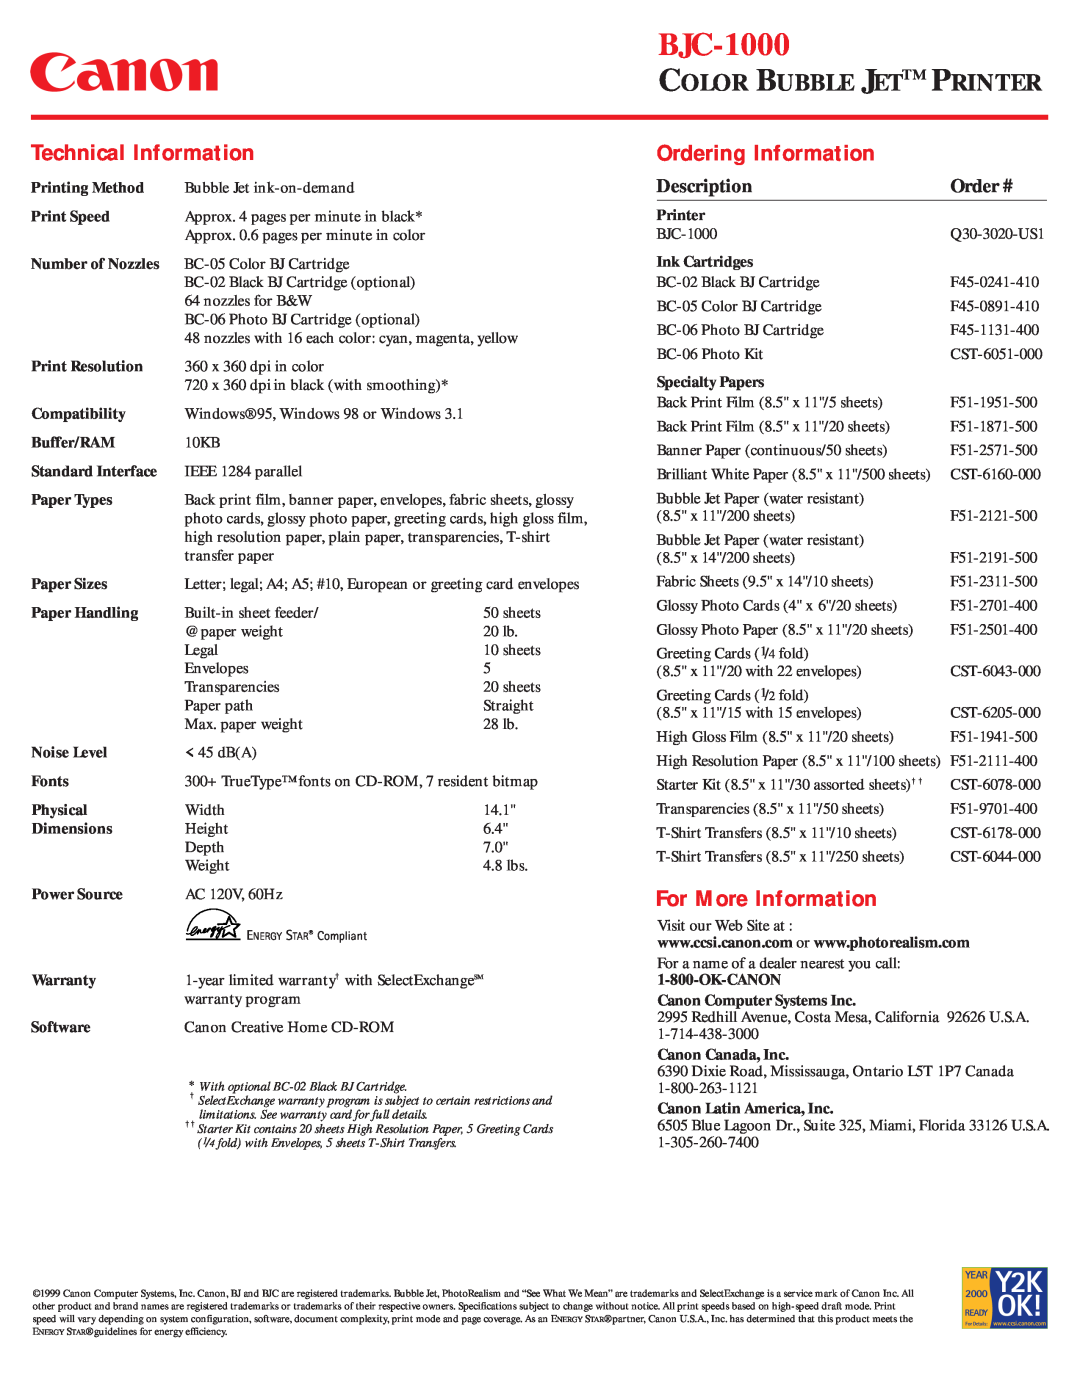 Canon BJC-1000 Technical Information, Ordering Information, For More Information, Color Bubble Jet Printer, Description 